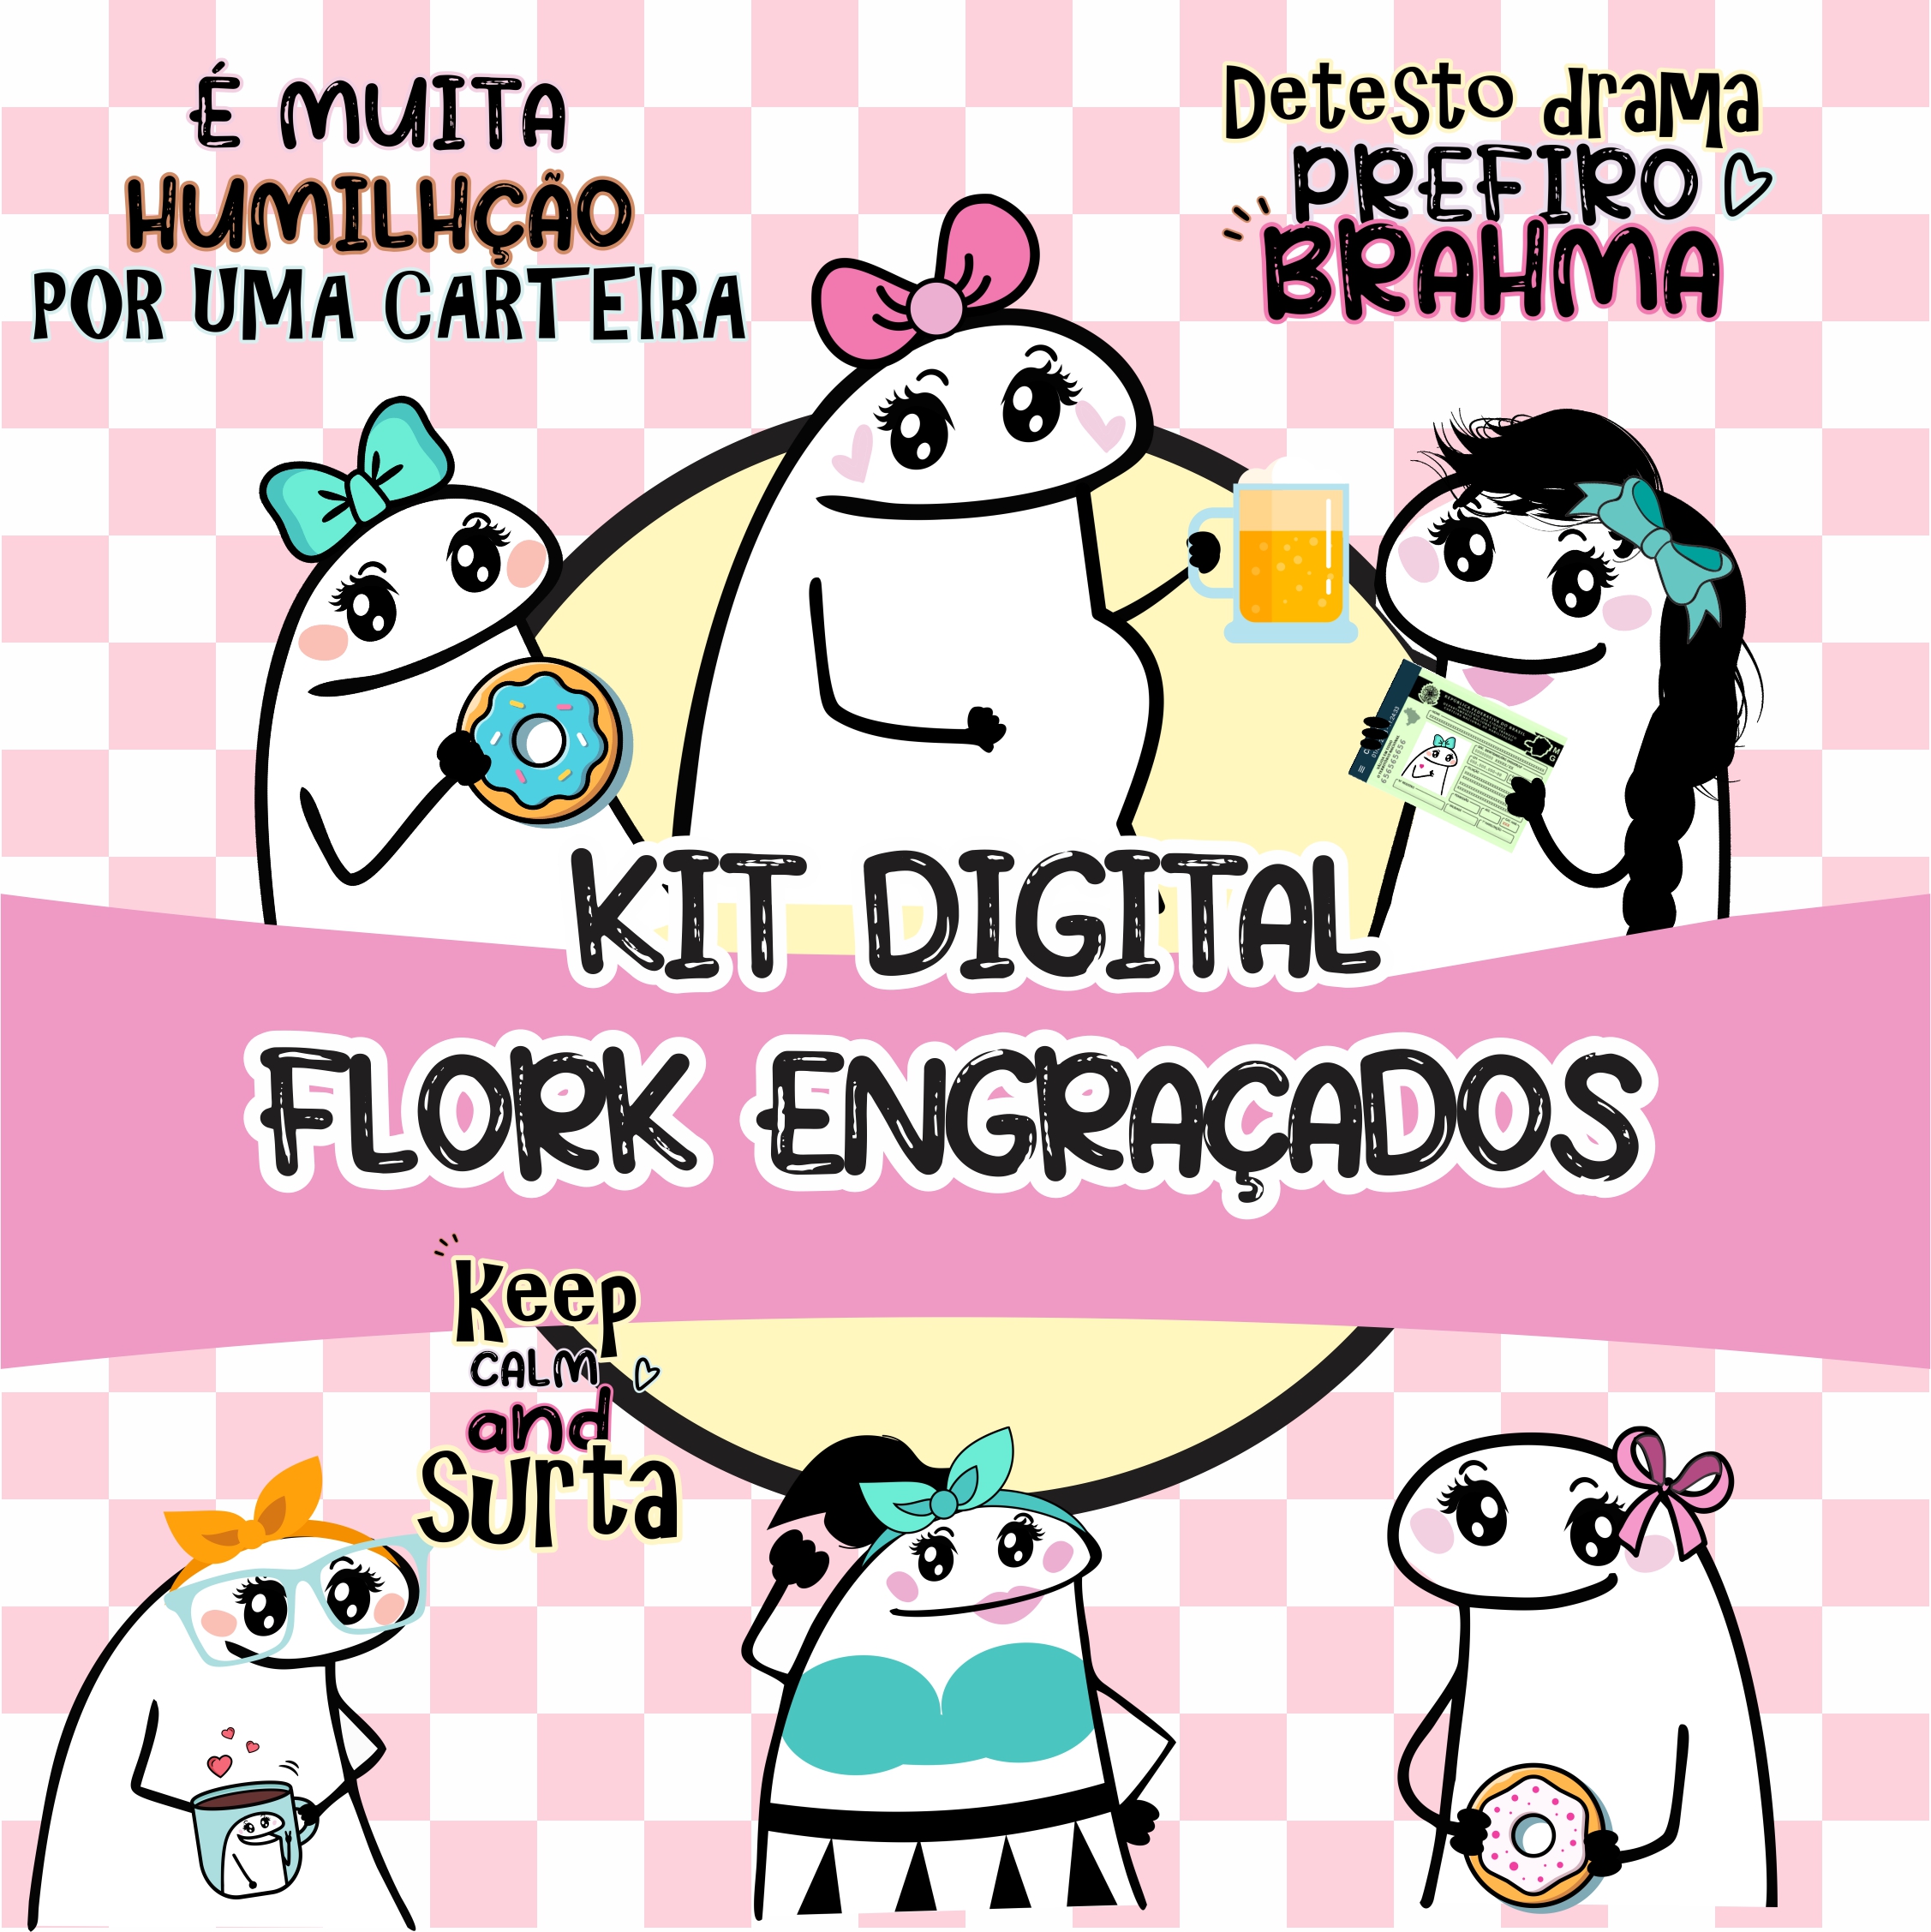 Pack Pacote de Imagens - Kit Digital - Bento Flork Meme